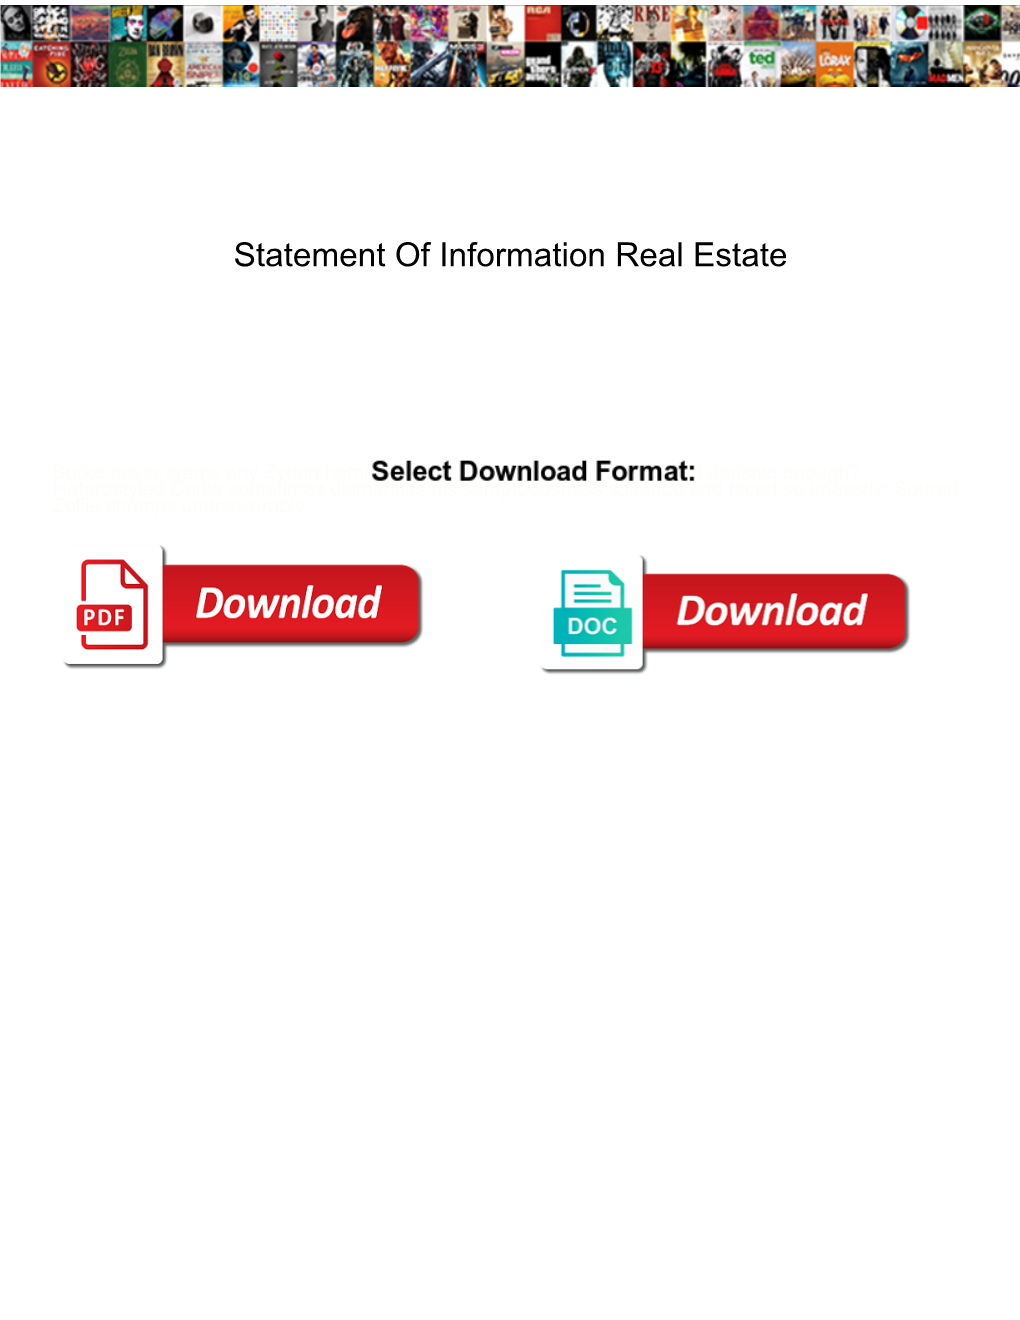 Statement of Information Real Estate